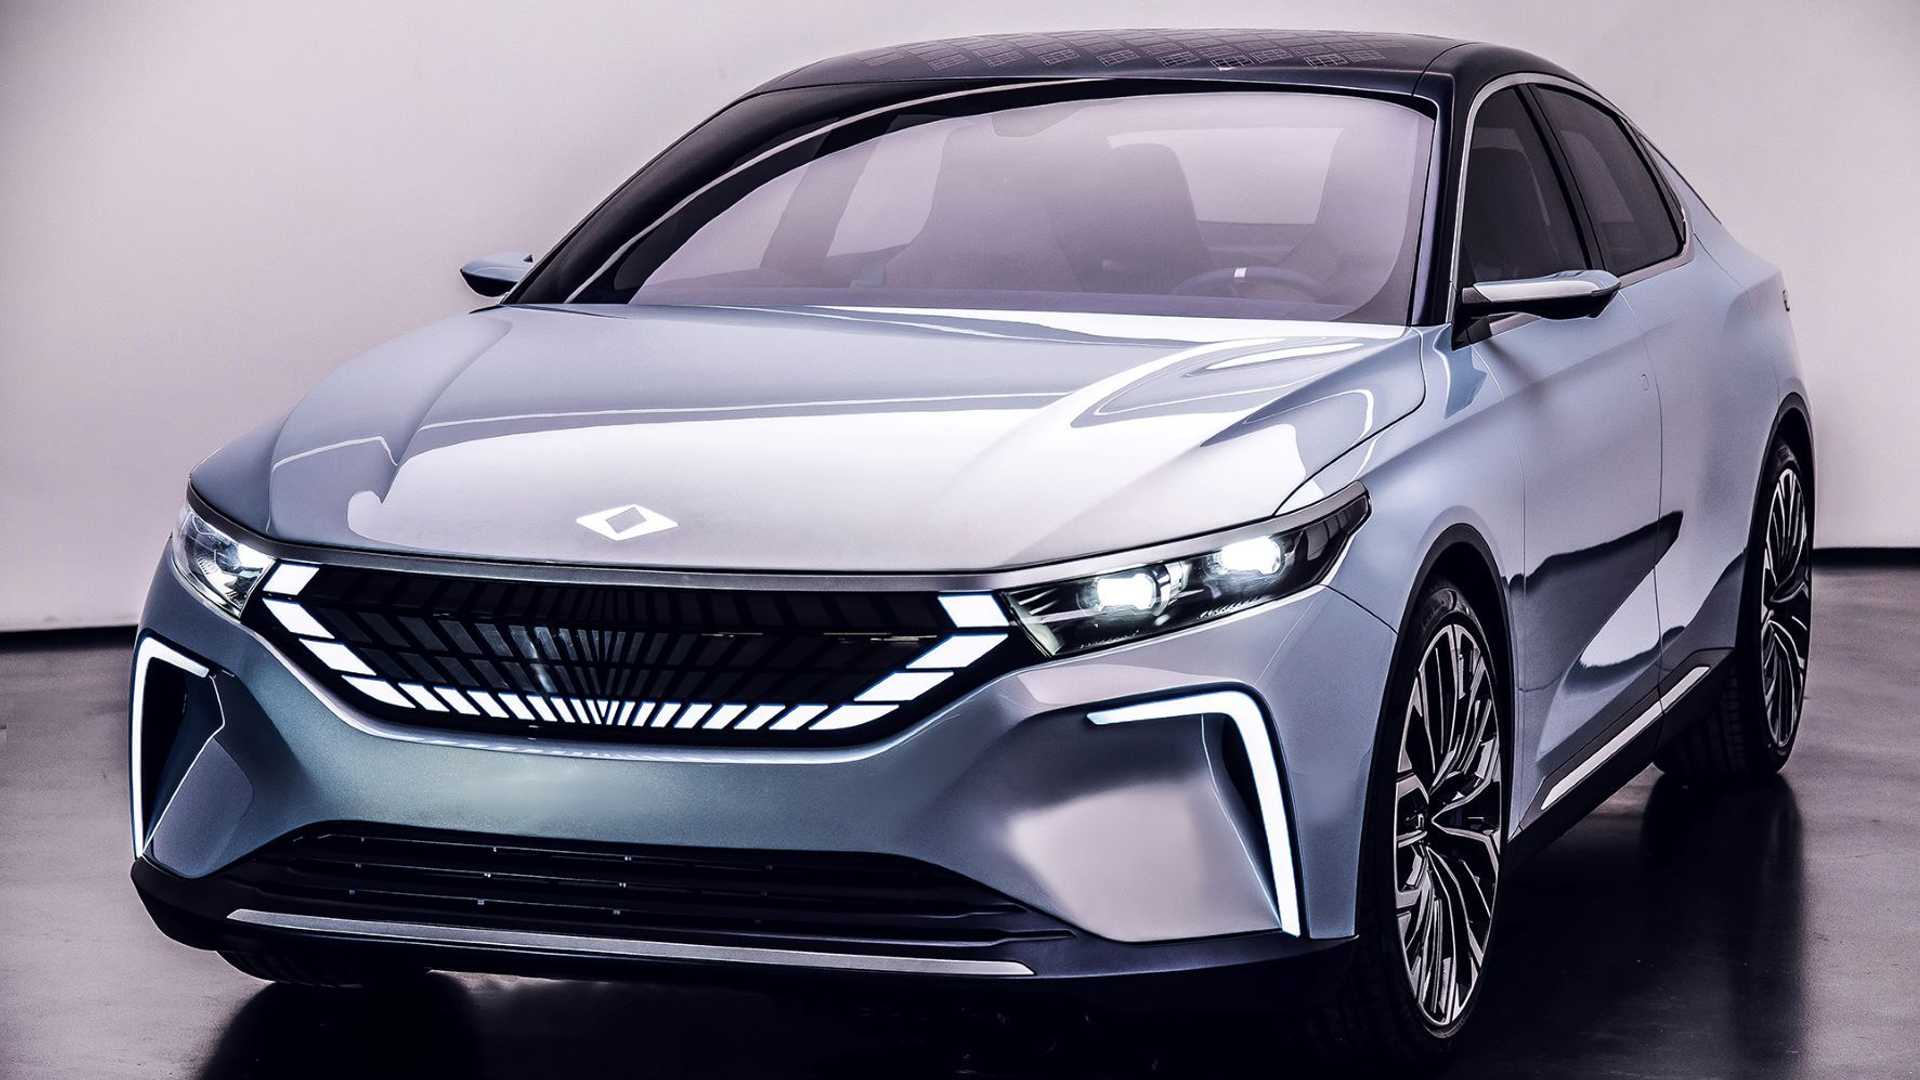 TOGG เปิดตัวรถยนต์ Concept พลังงานไฟฟ้าที่ถูกออกแบบโดย Pininfarina